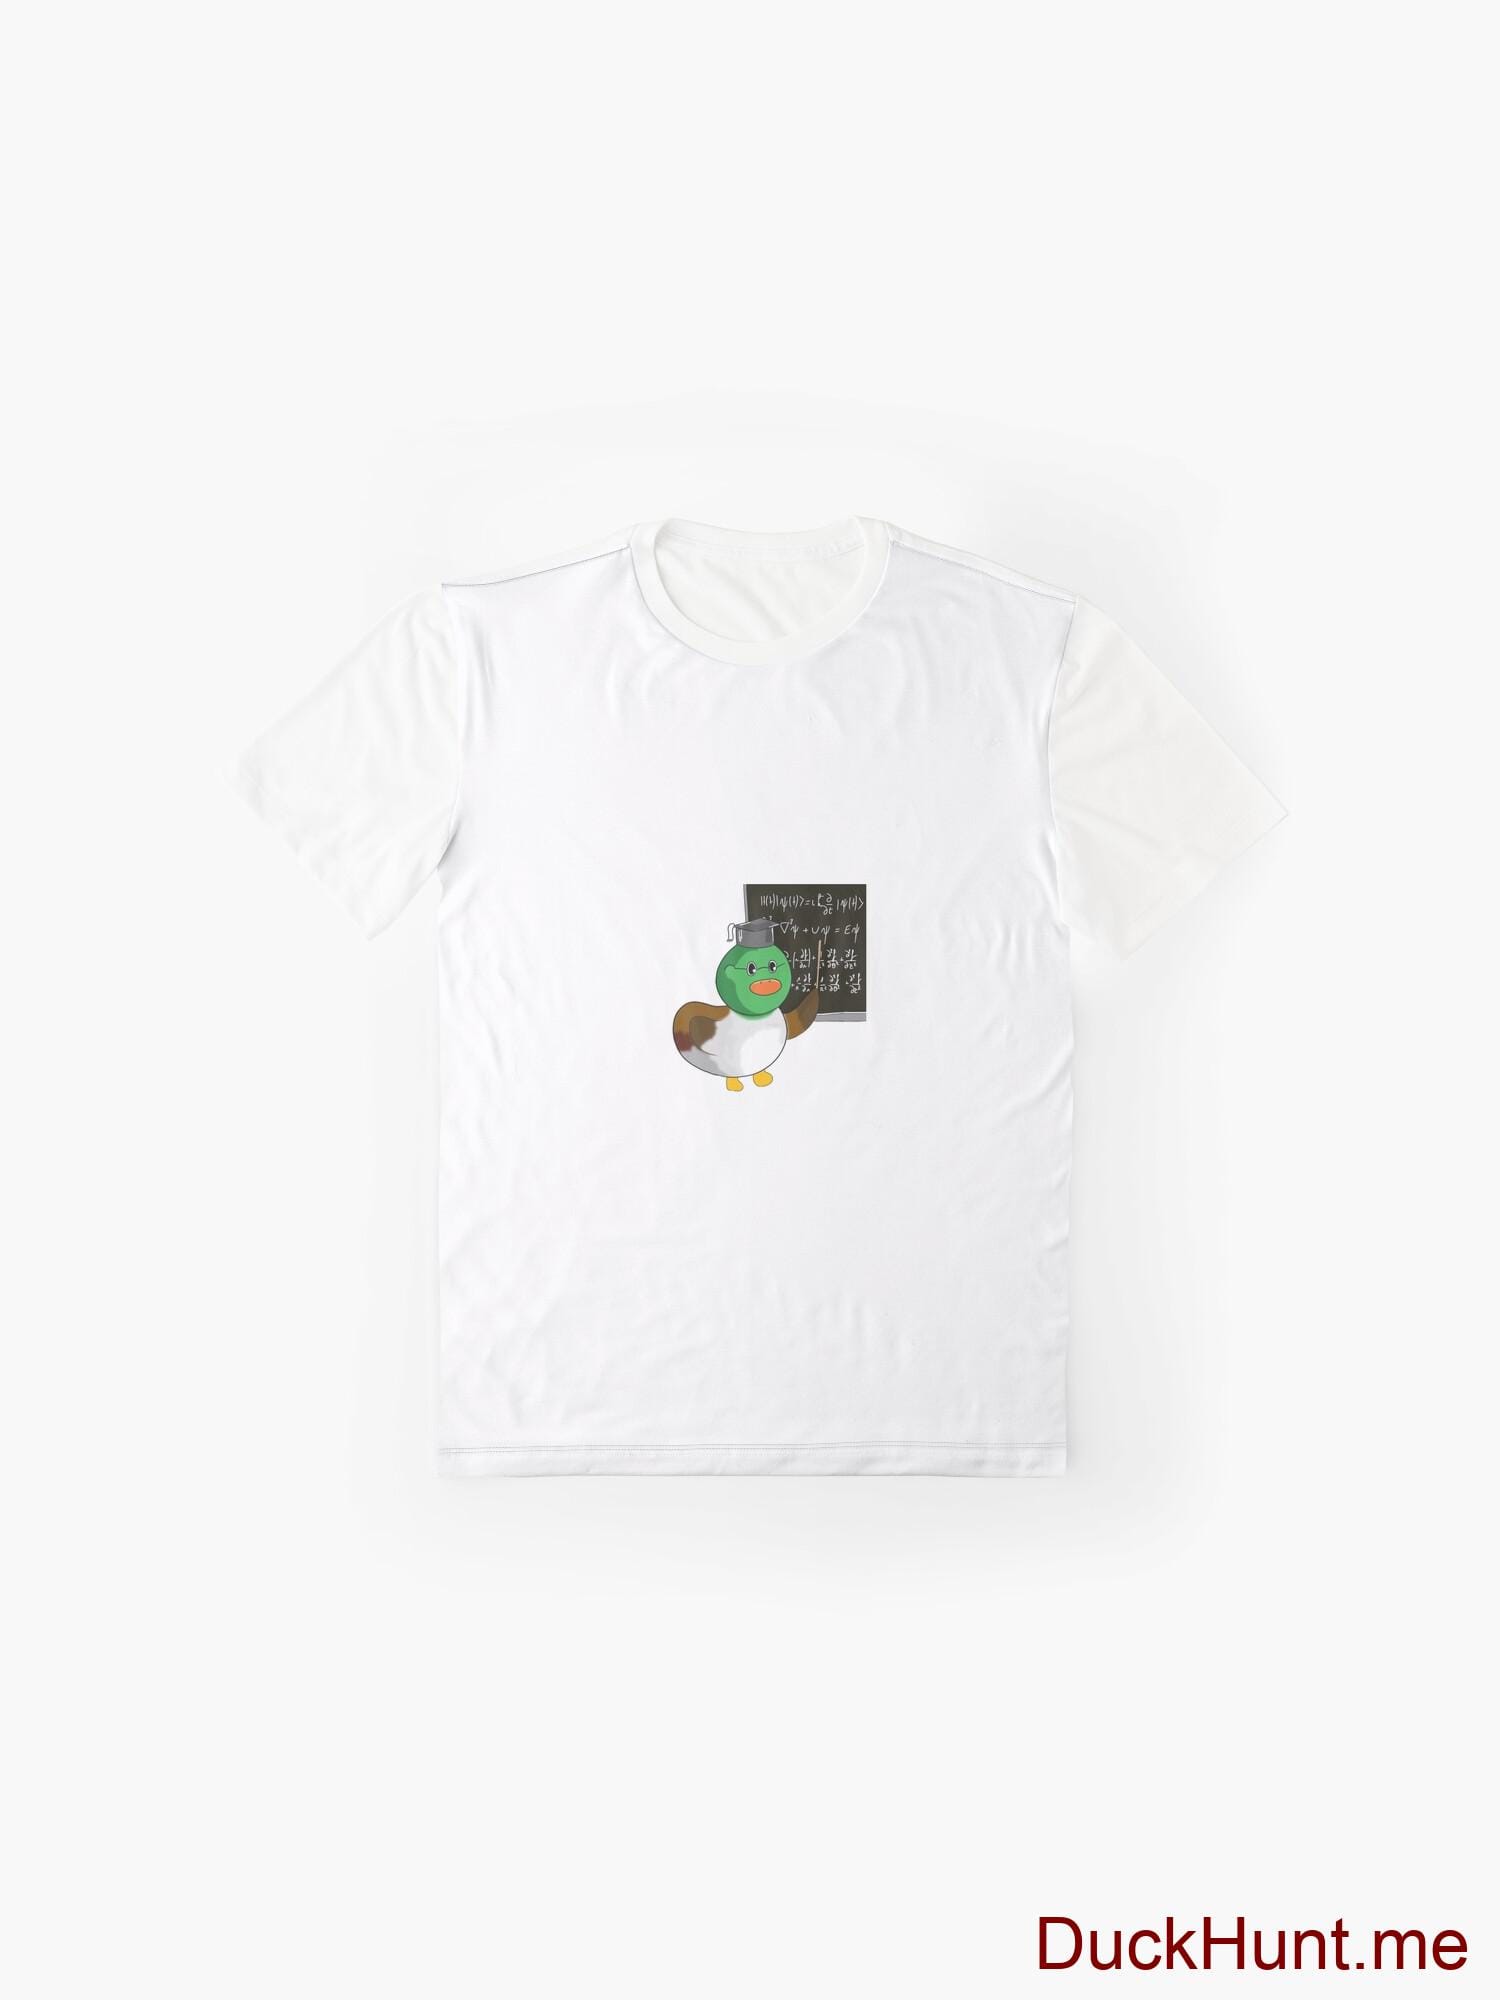 Prof Duck White Graphic T-Shirt alternative image 3